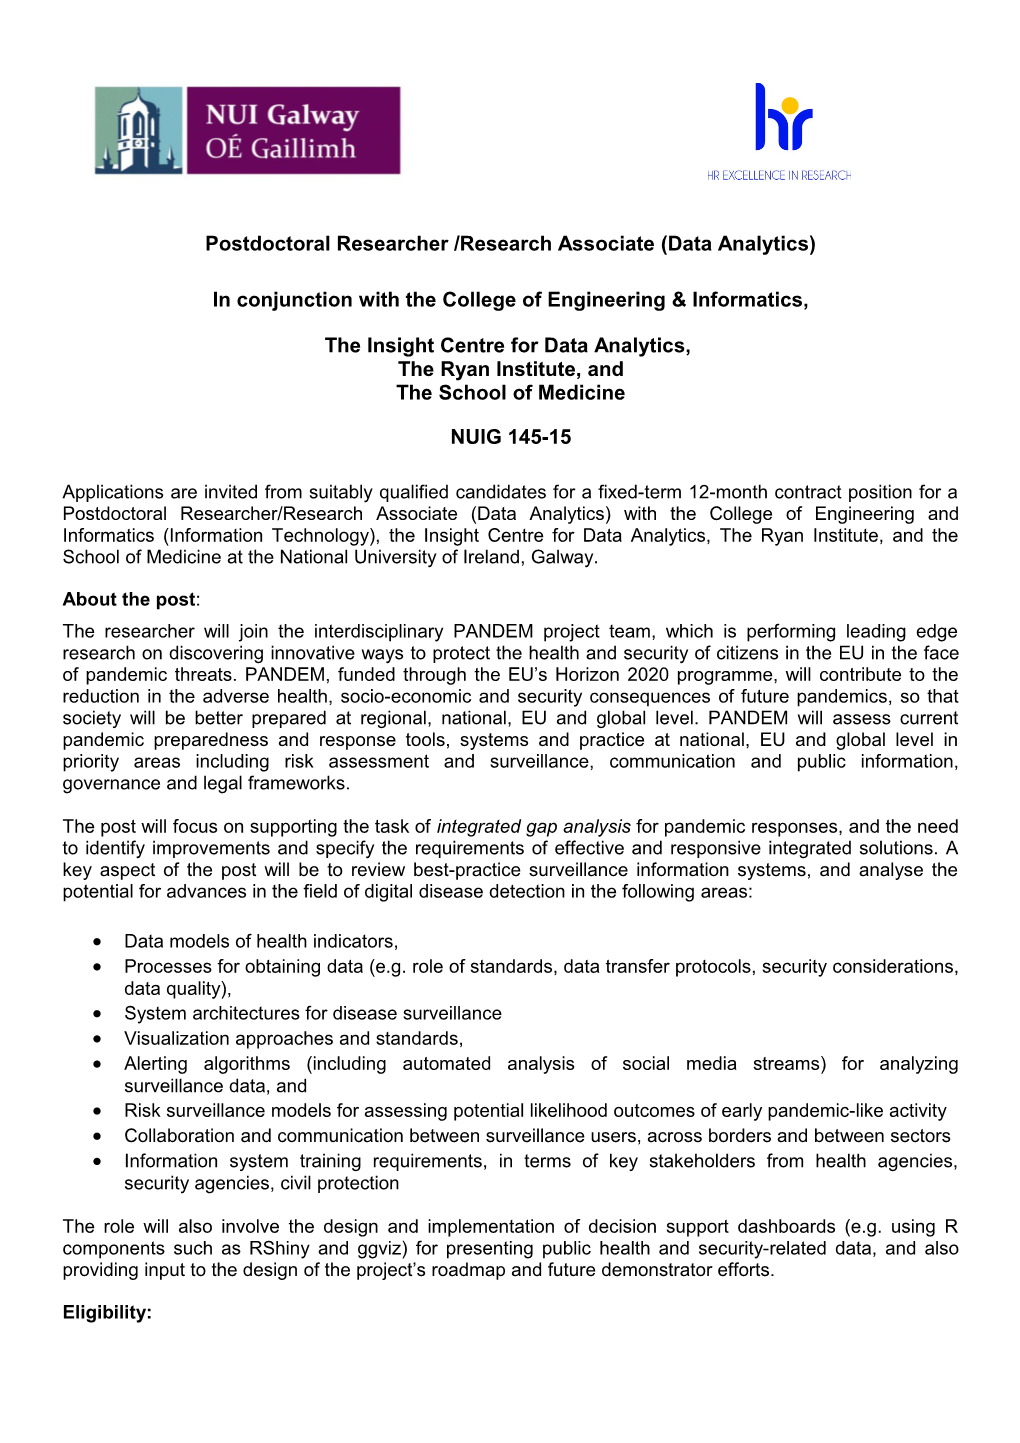 Postdoctoral Researcher/Research Associate (Data Analytics)